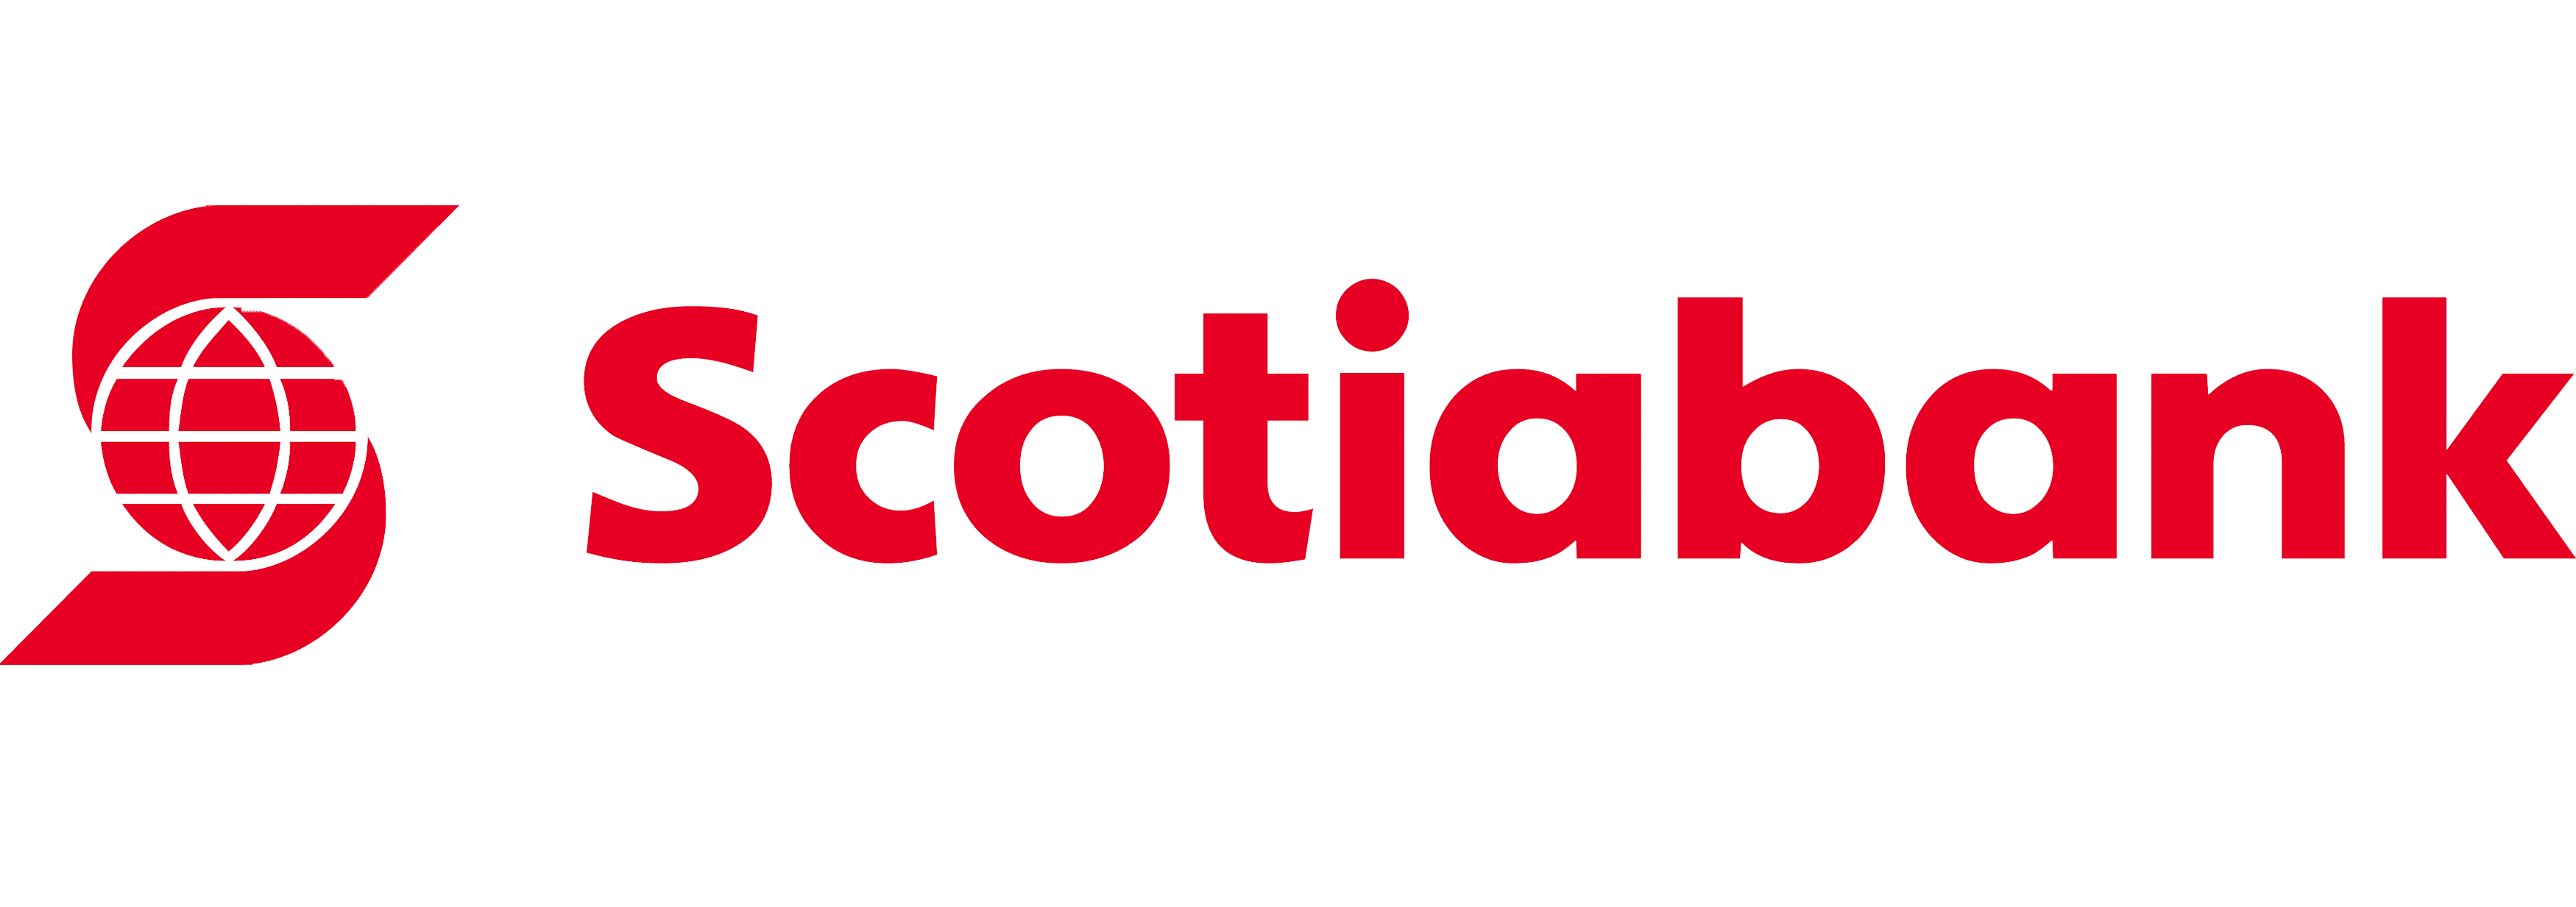 Image result for scotiabank logo